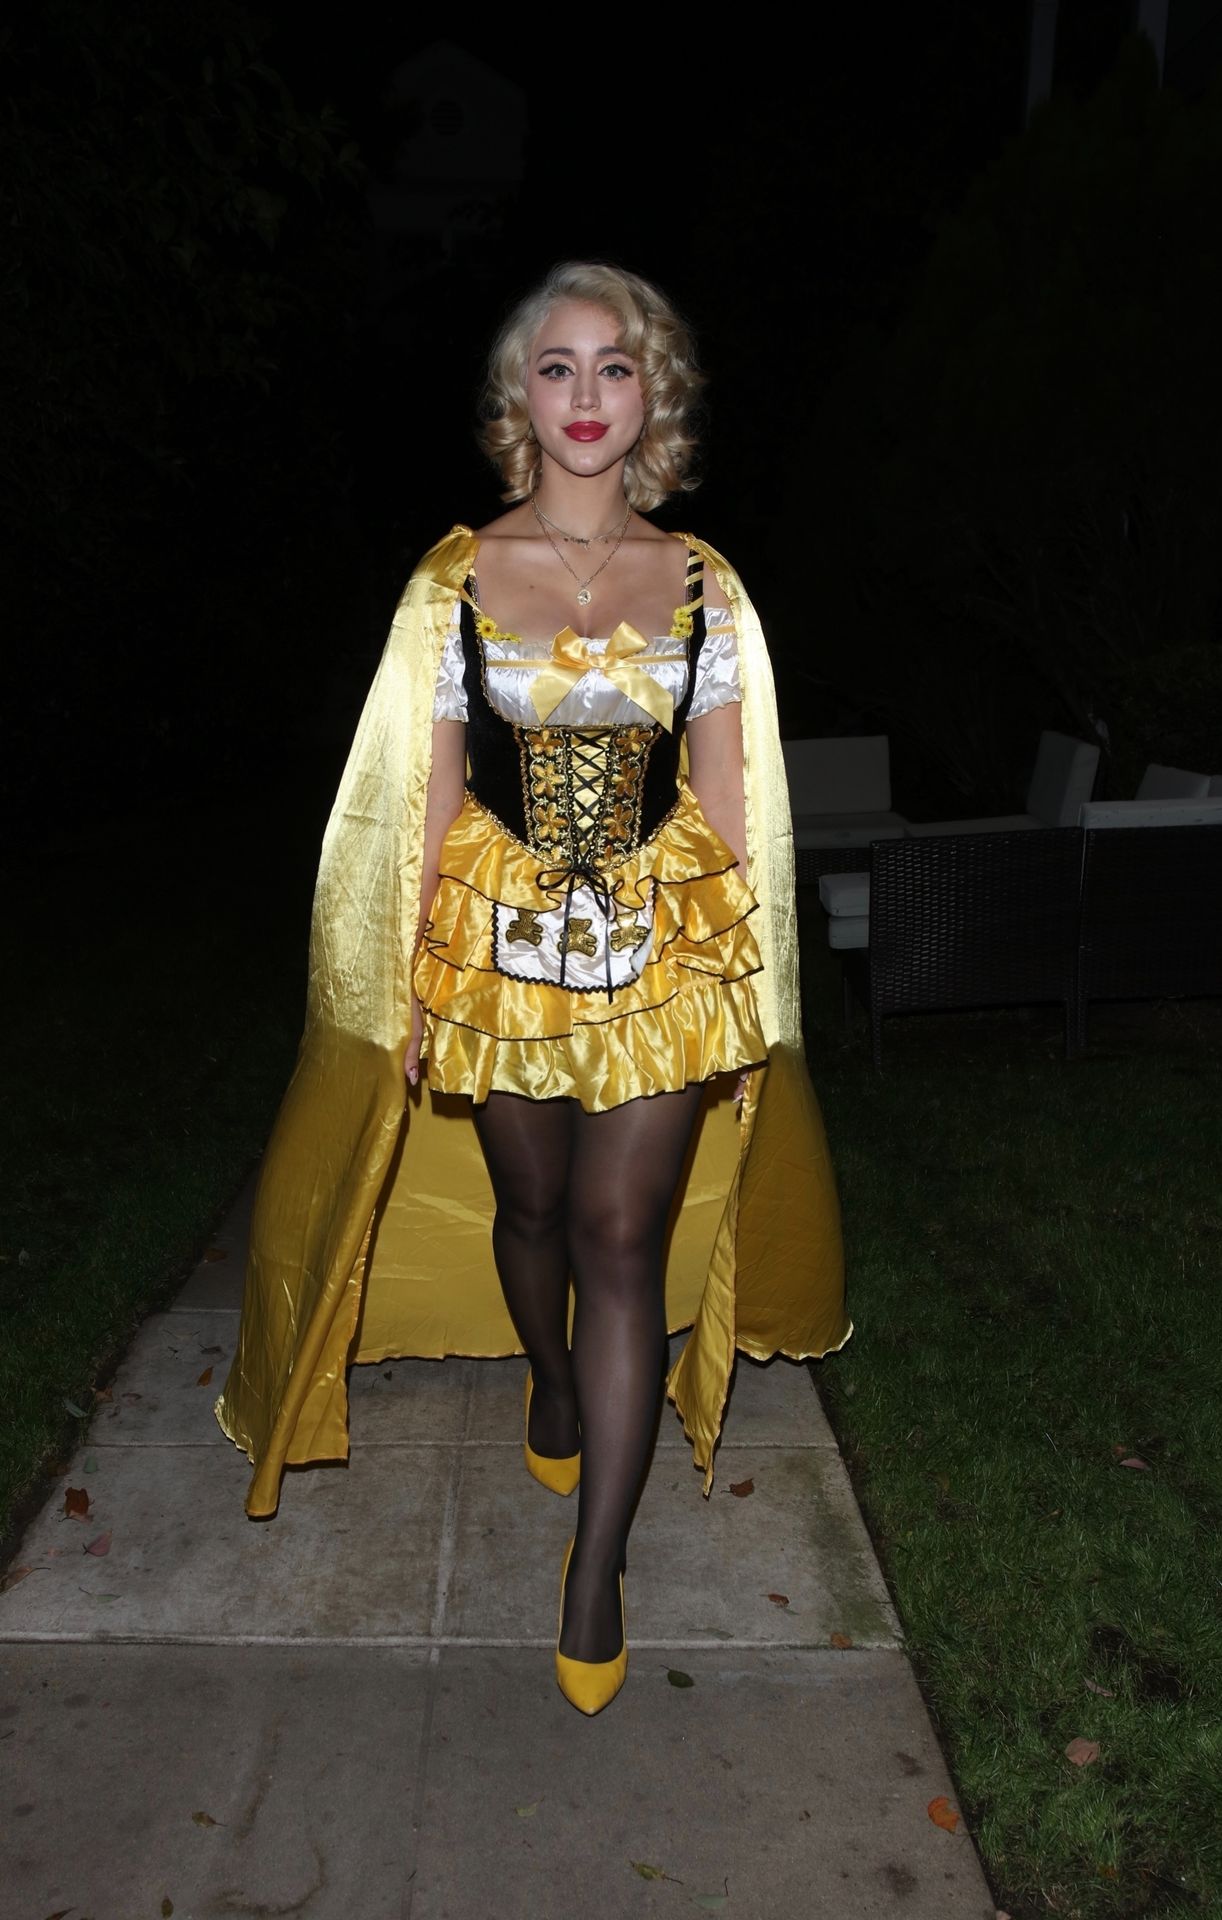 Caylee Cowan is Seen as Goldilocks at a Halloween Party (15 Photos)